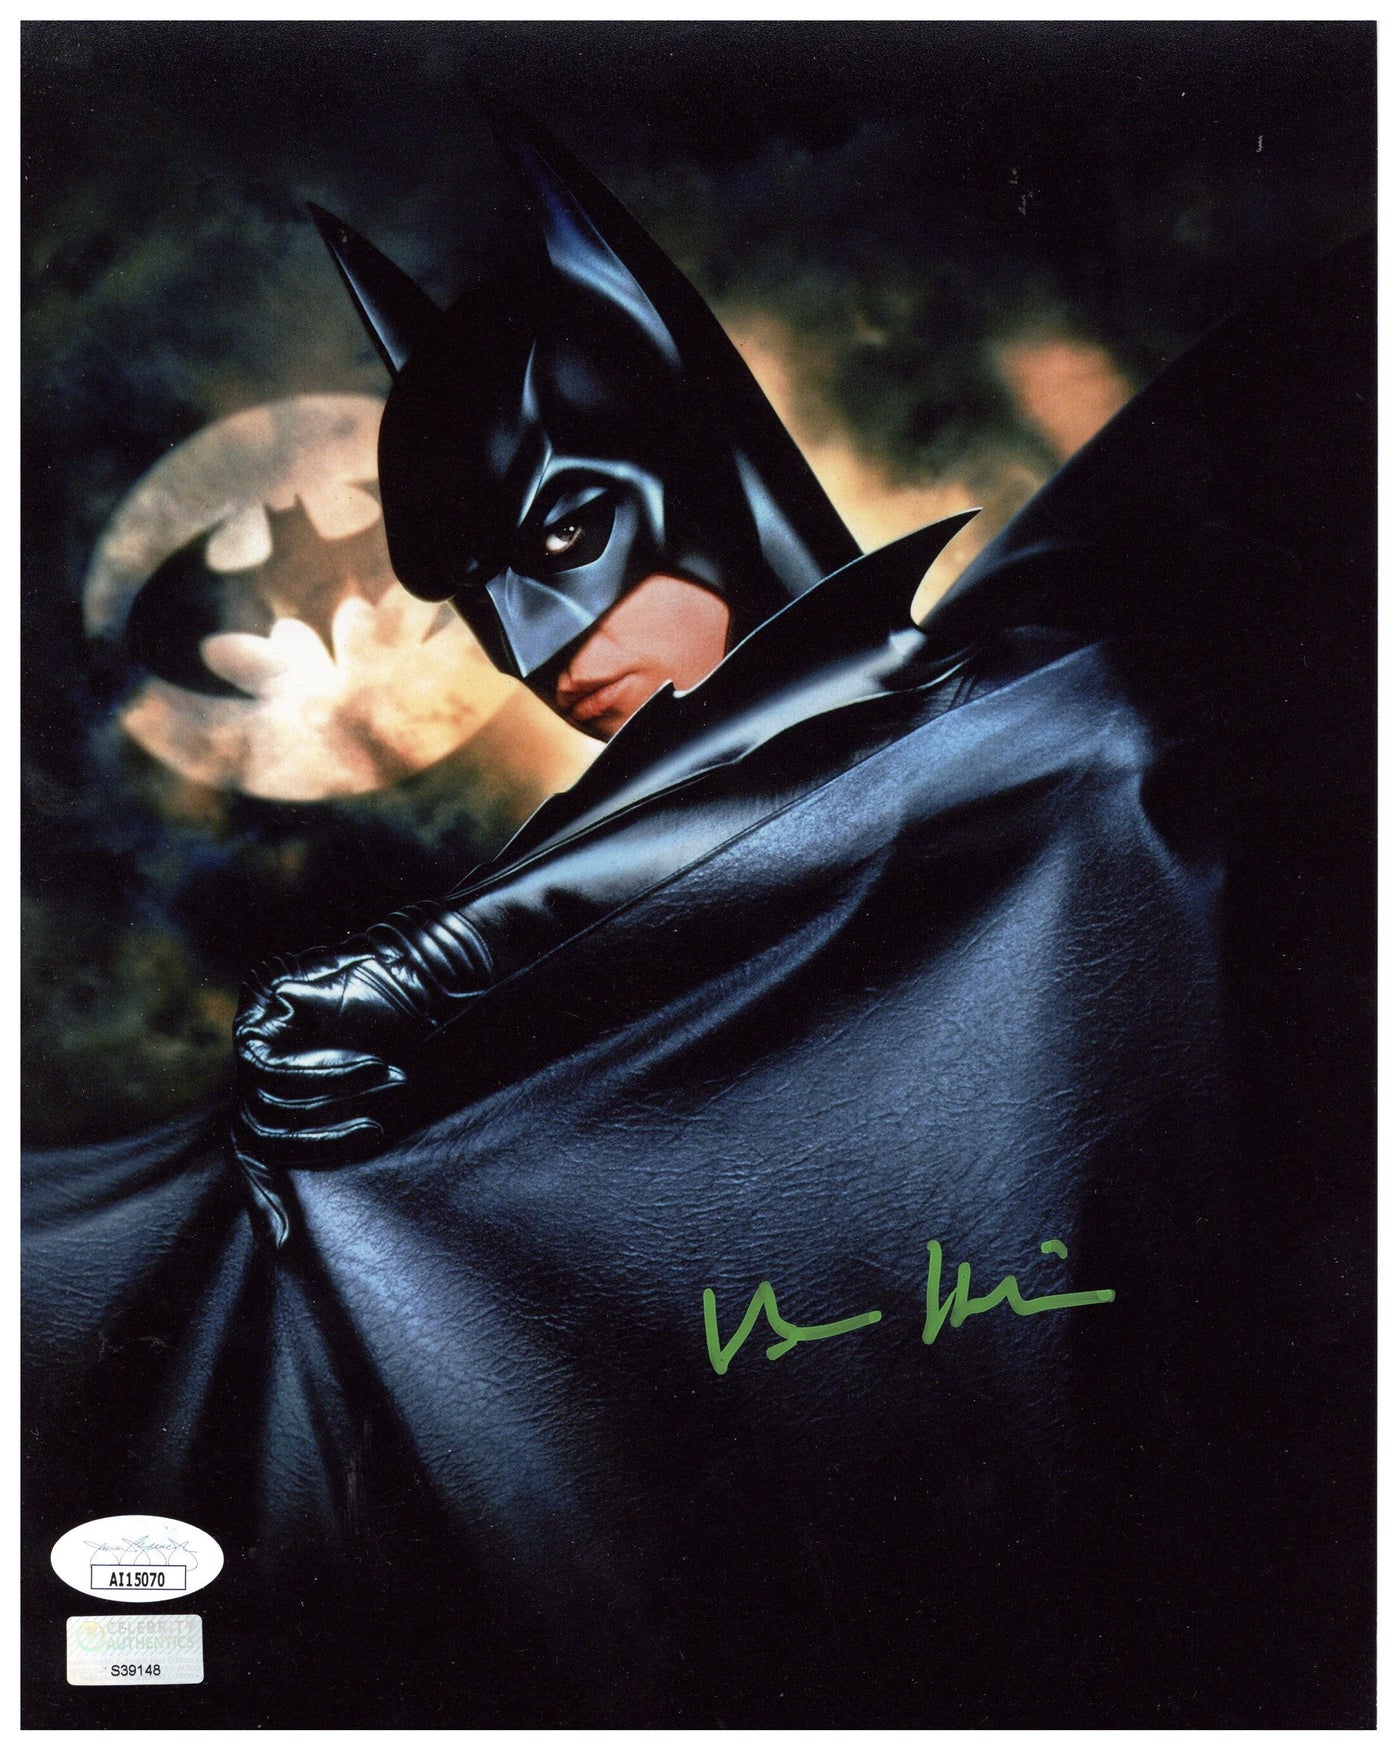 VAL KILMER SIGNED 8X10 PHOTO BATMAN FOREVER - AUTOGRAPHED JSA COA